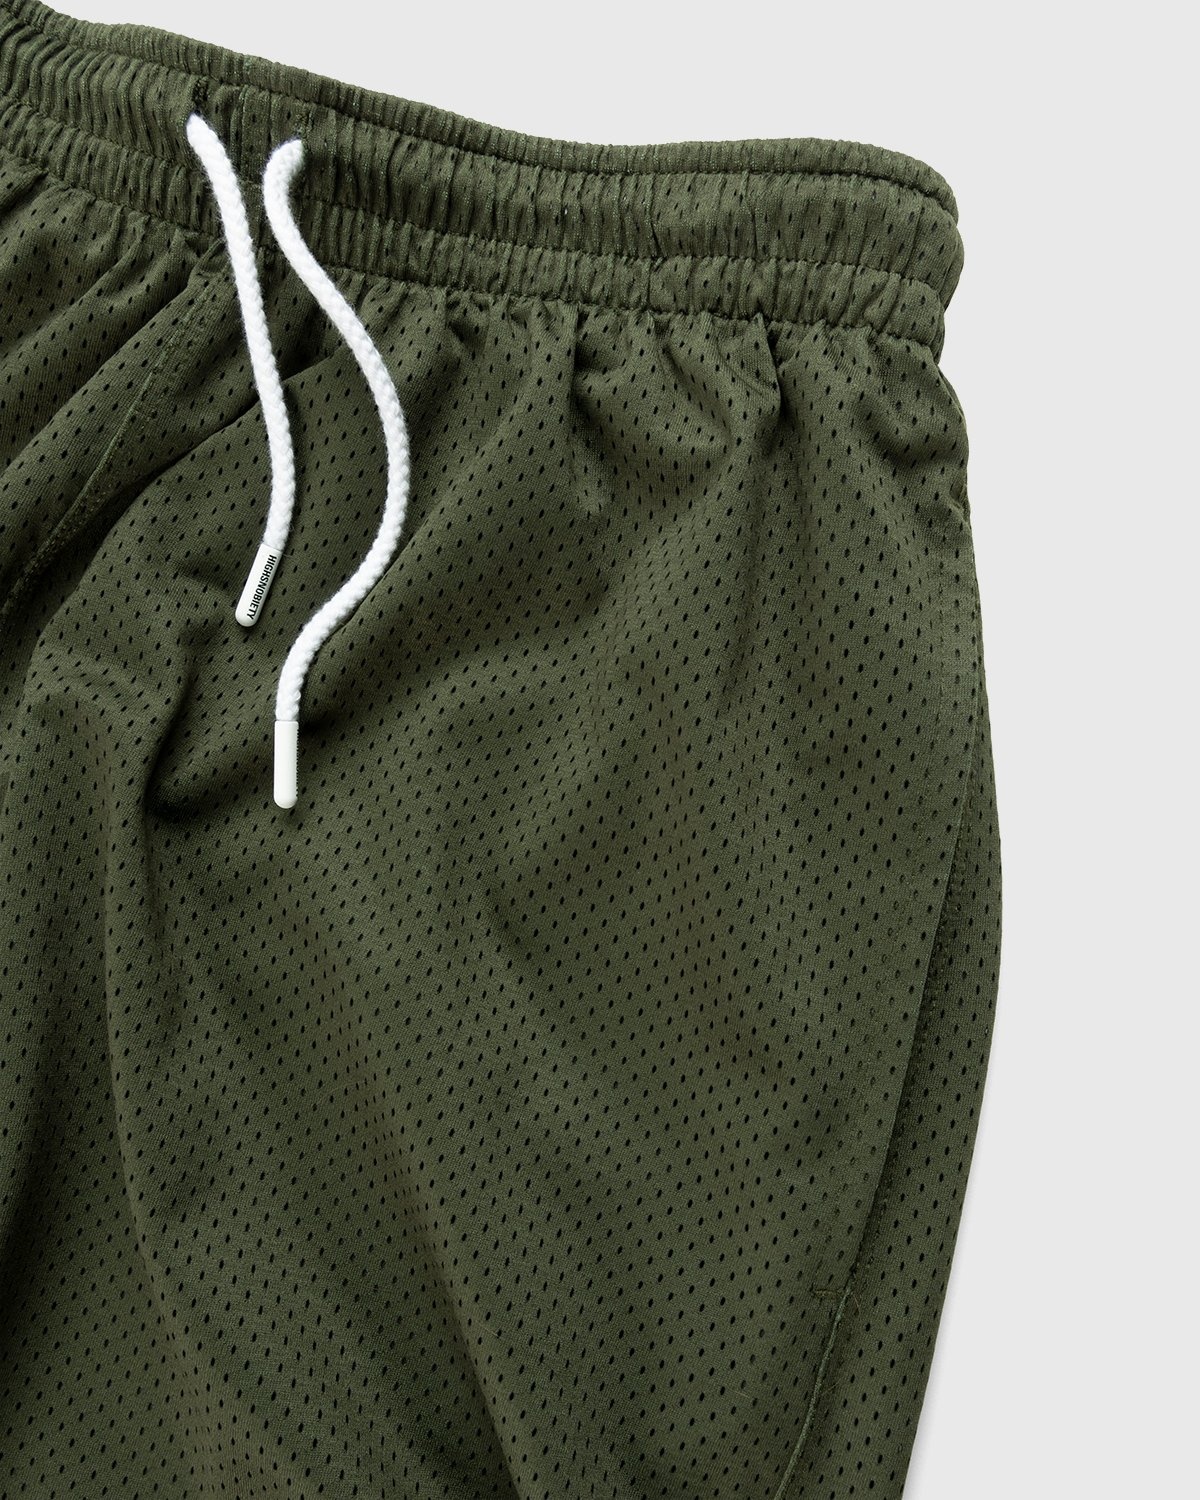 Highsnobiety – HS Sports Reversible Mesh Shorts Black/Khaki - Short Cuts - Green - Image 7